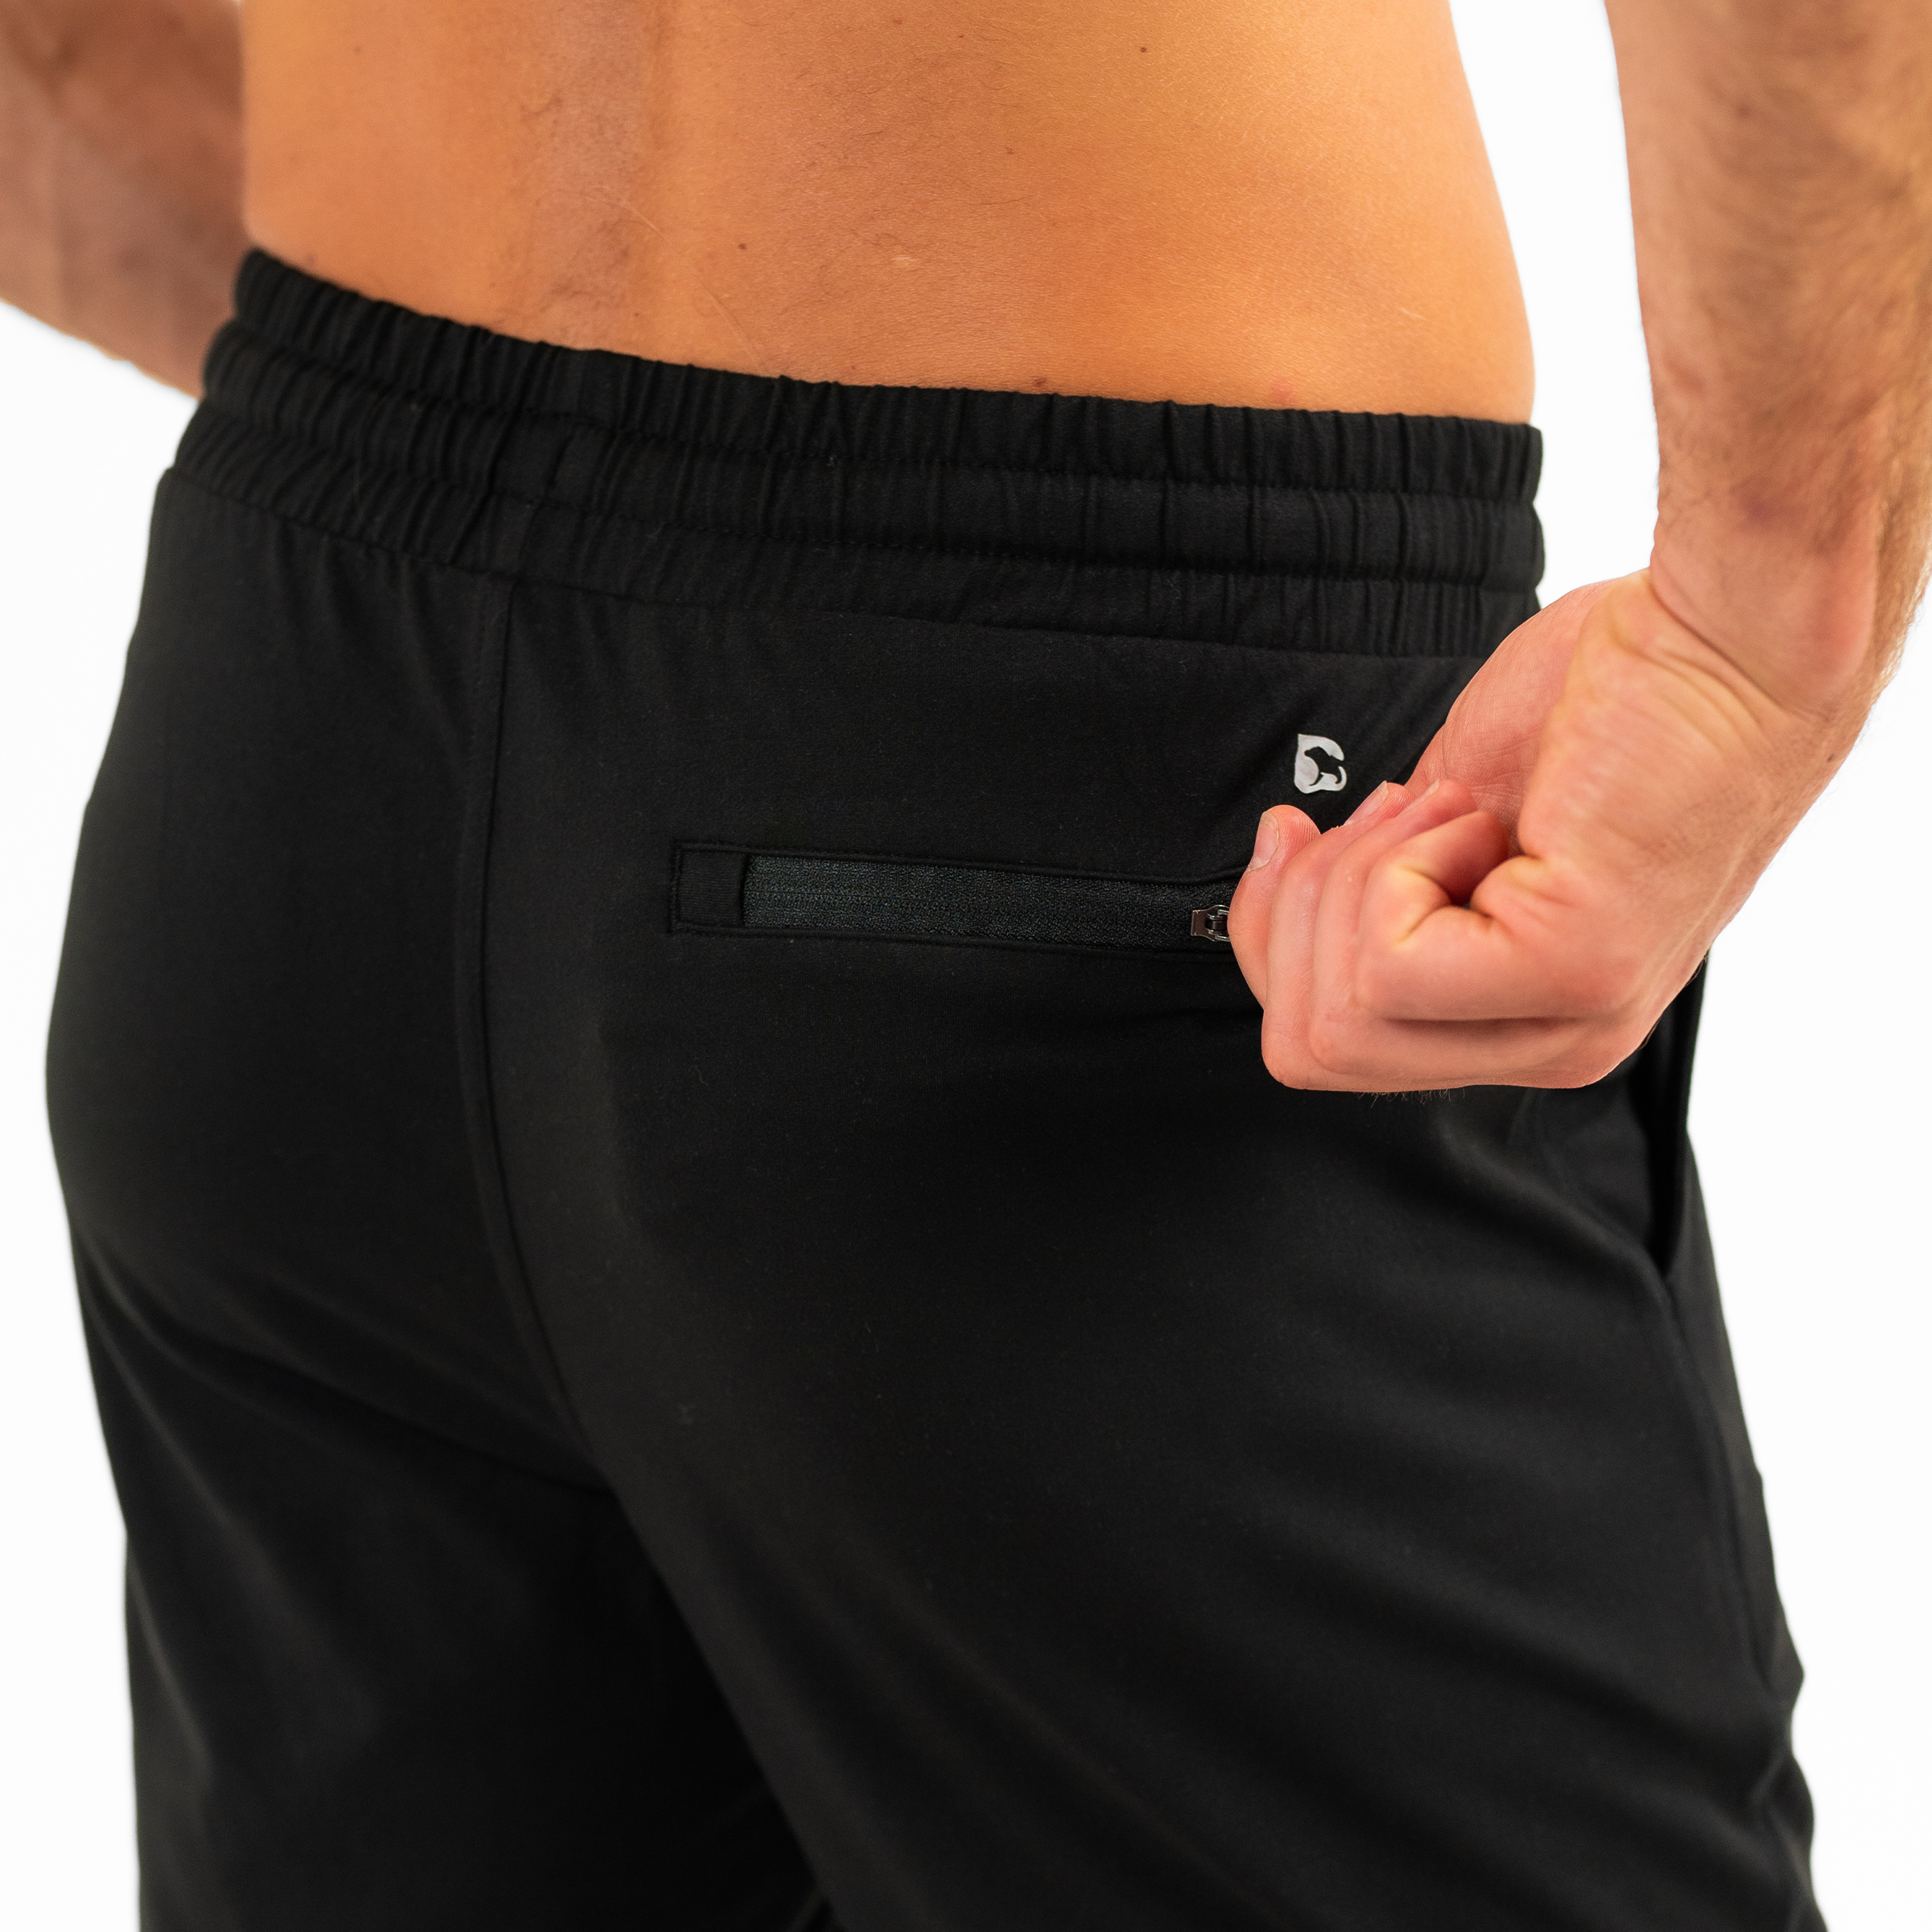 Tech Jogger Black back on model zipping back right zipper pocket